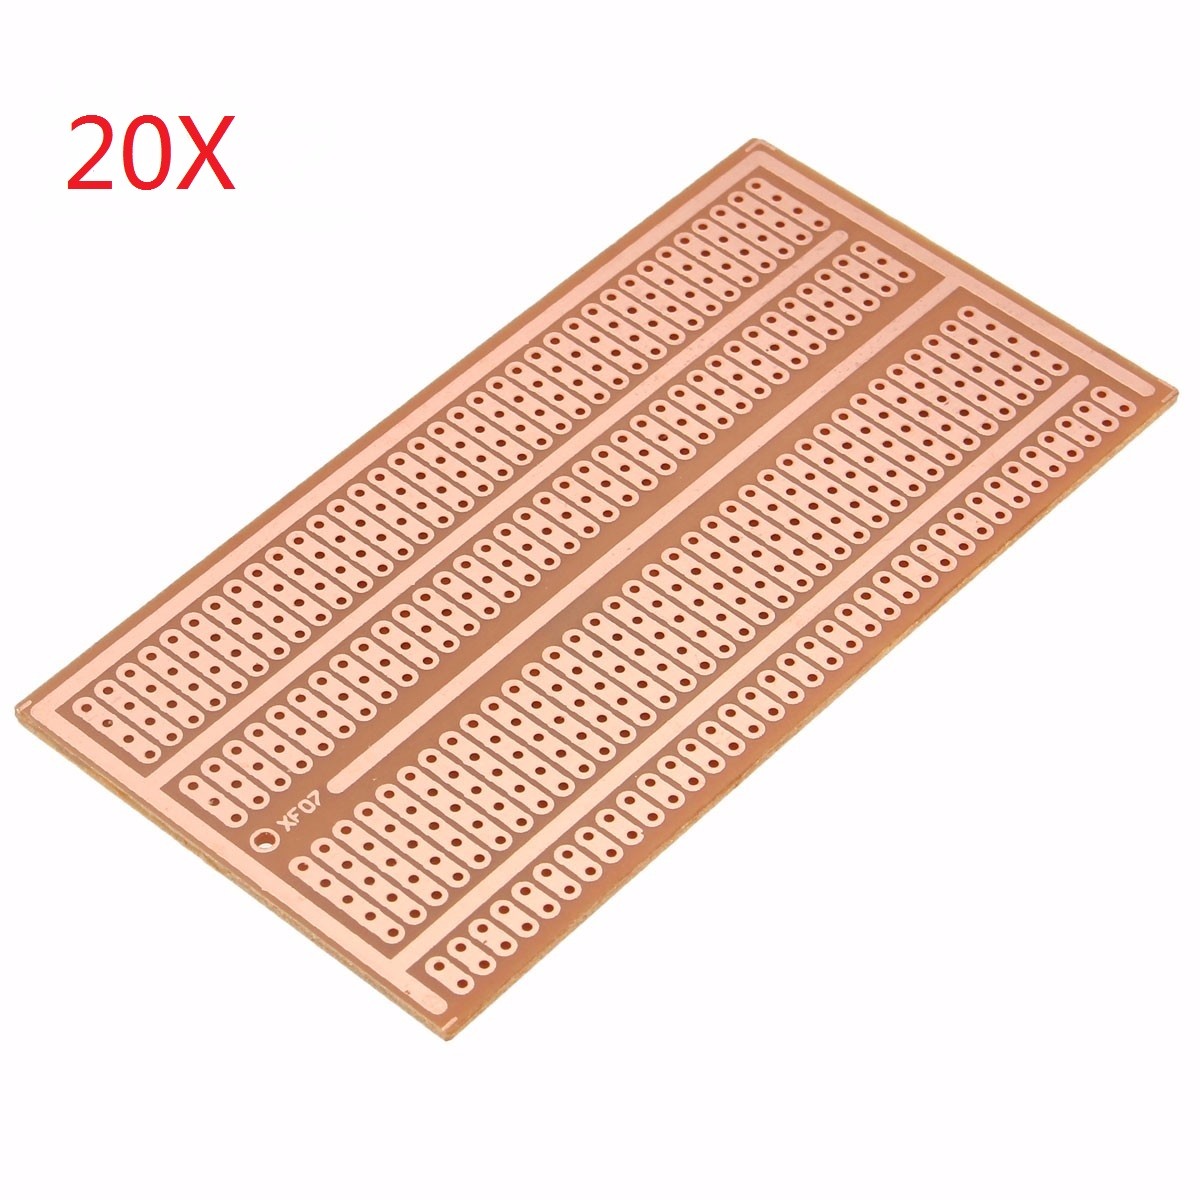 20X Double Side Protoboard Circuit Universal Prototype PCB Breadboard Board